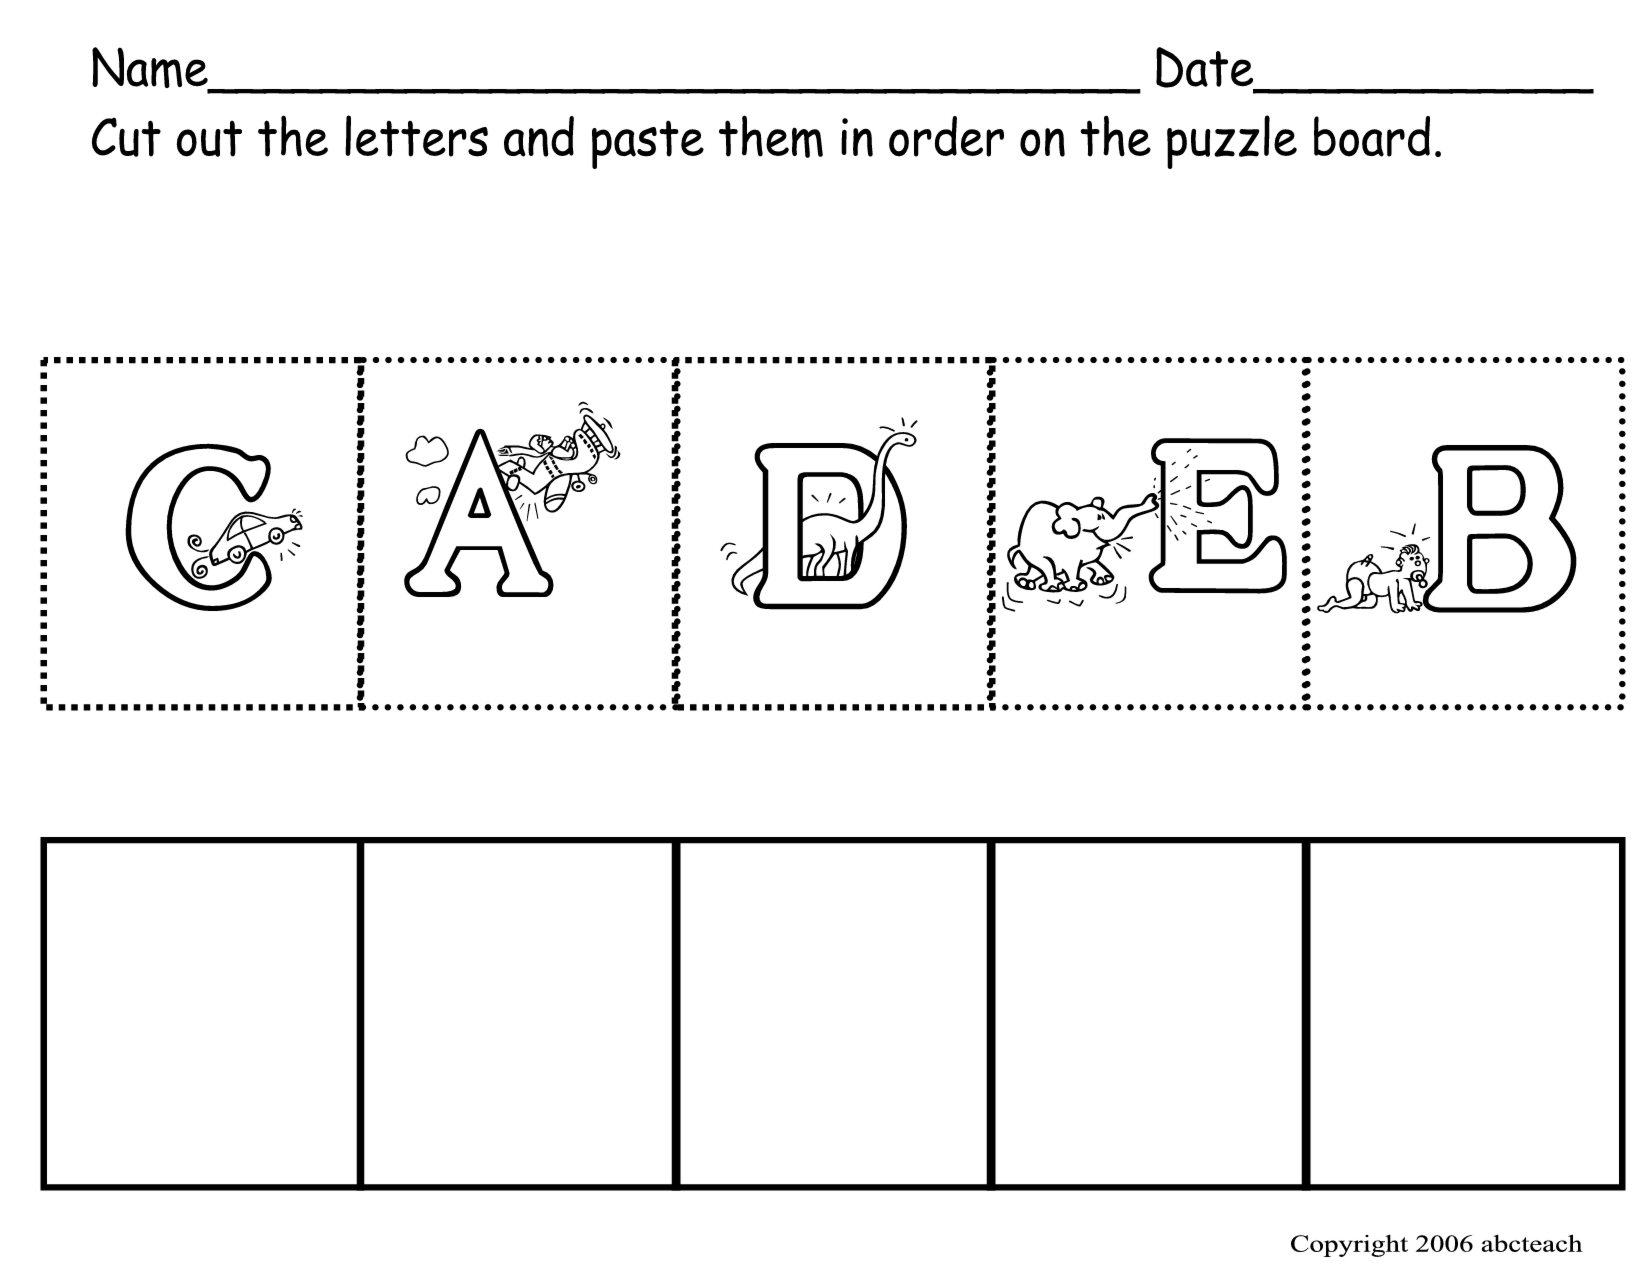 Worksheets For Kids Pdf | Chesterudell inside Grade 1 Alphabet Worksheets Pdf